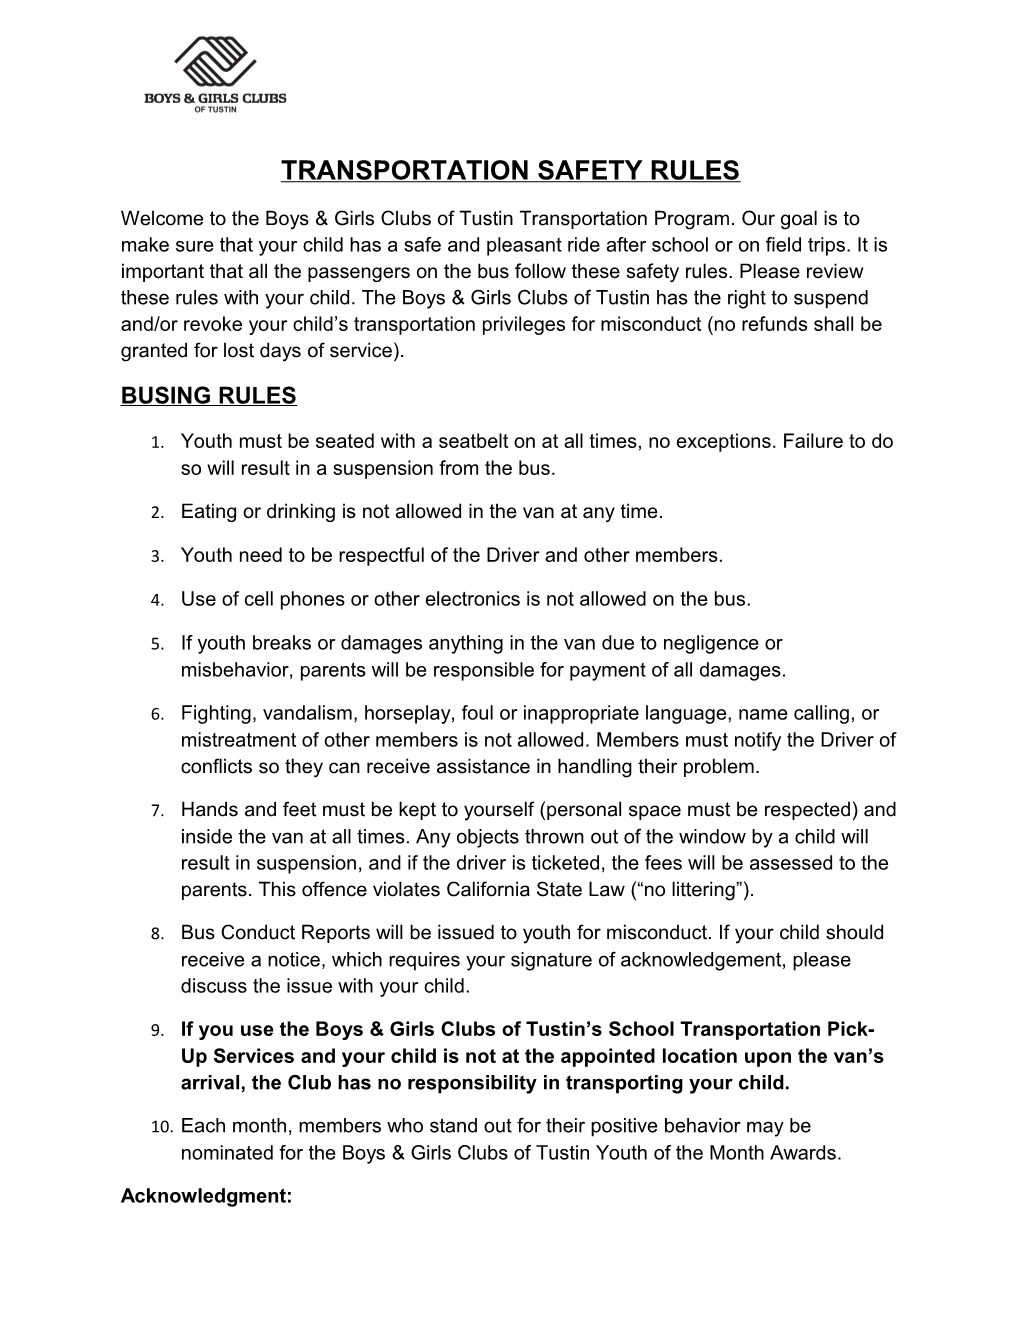 Transportation Safety Rules